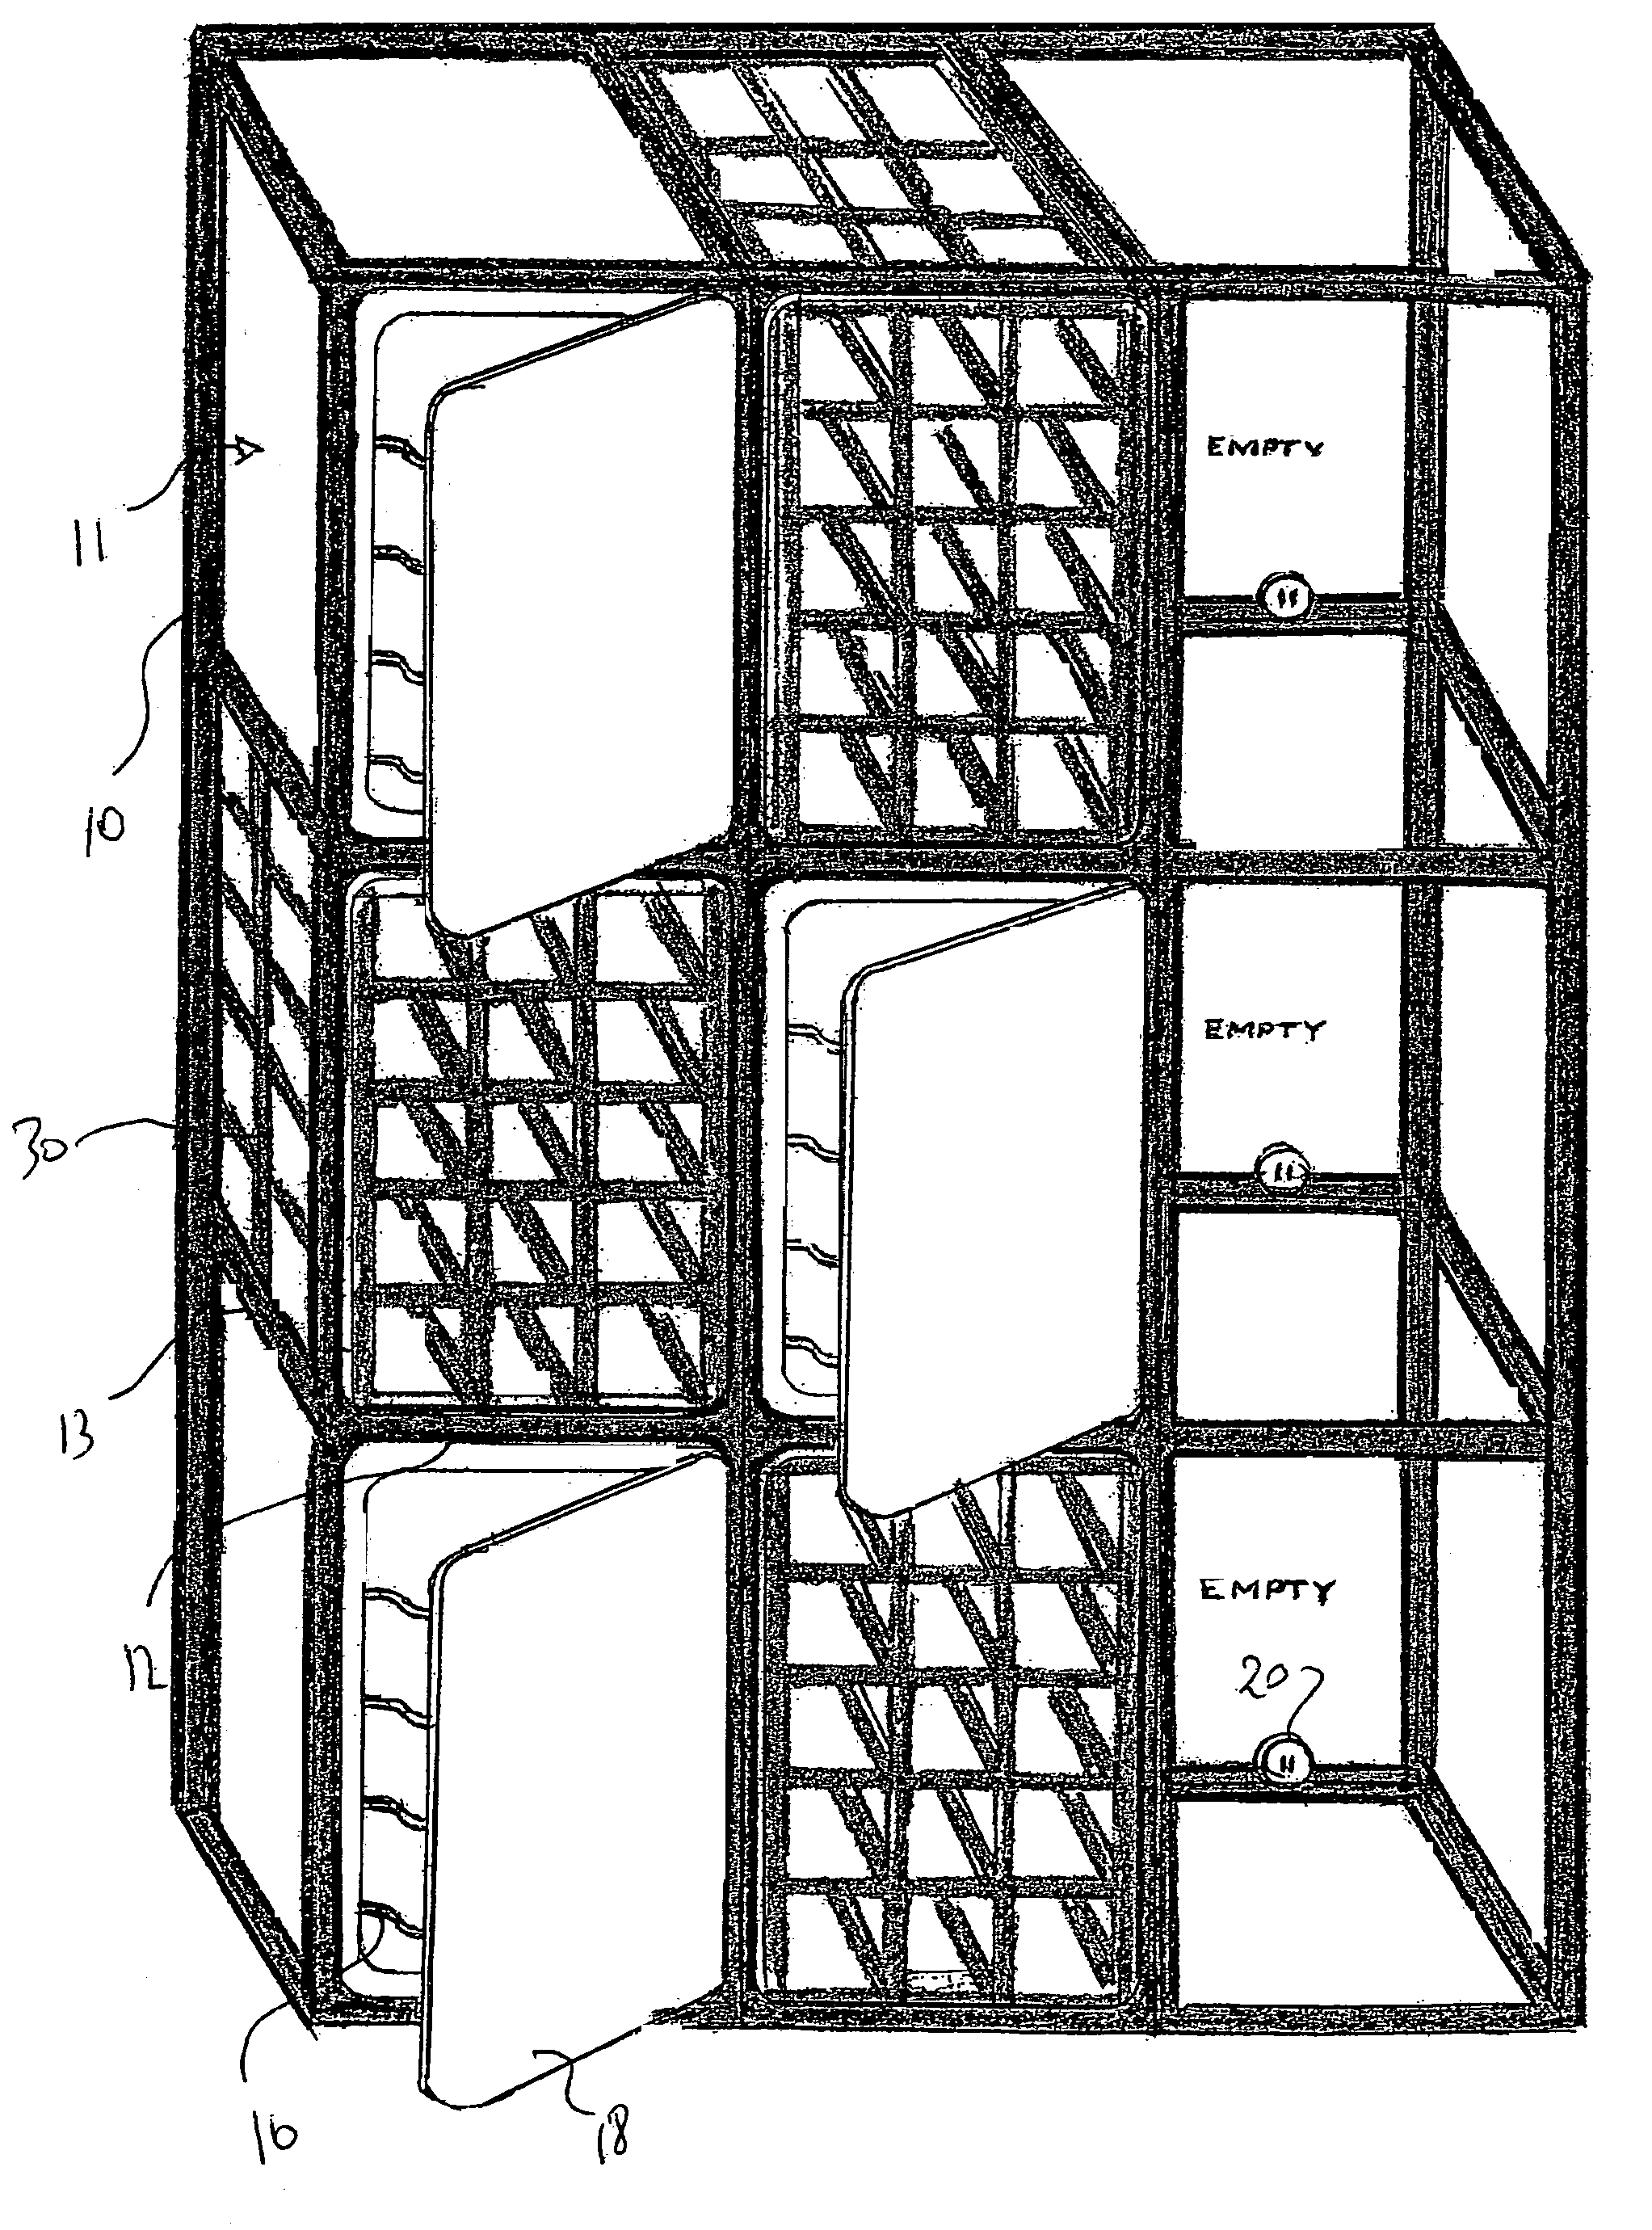 Modular wine cellar and wine storage system